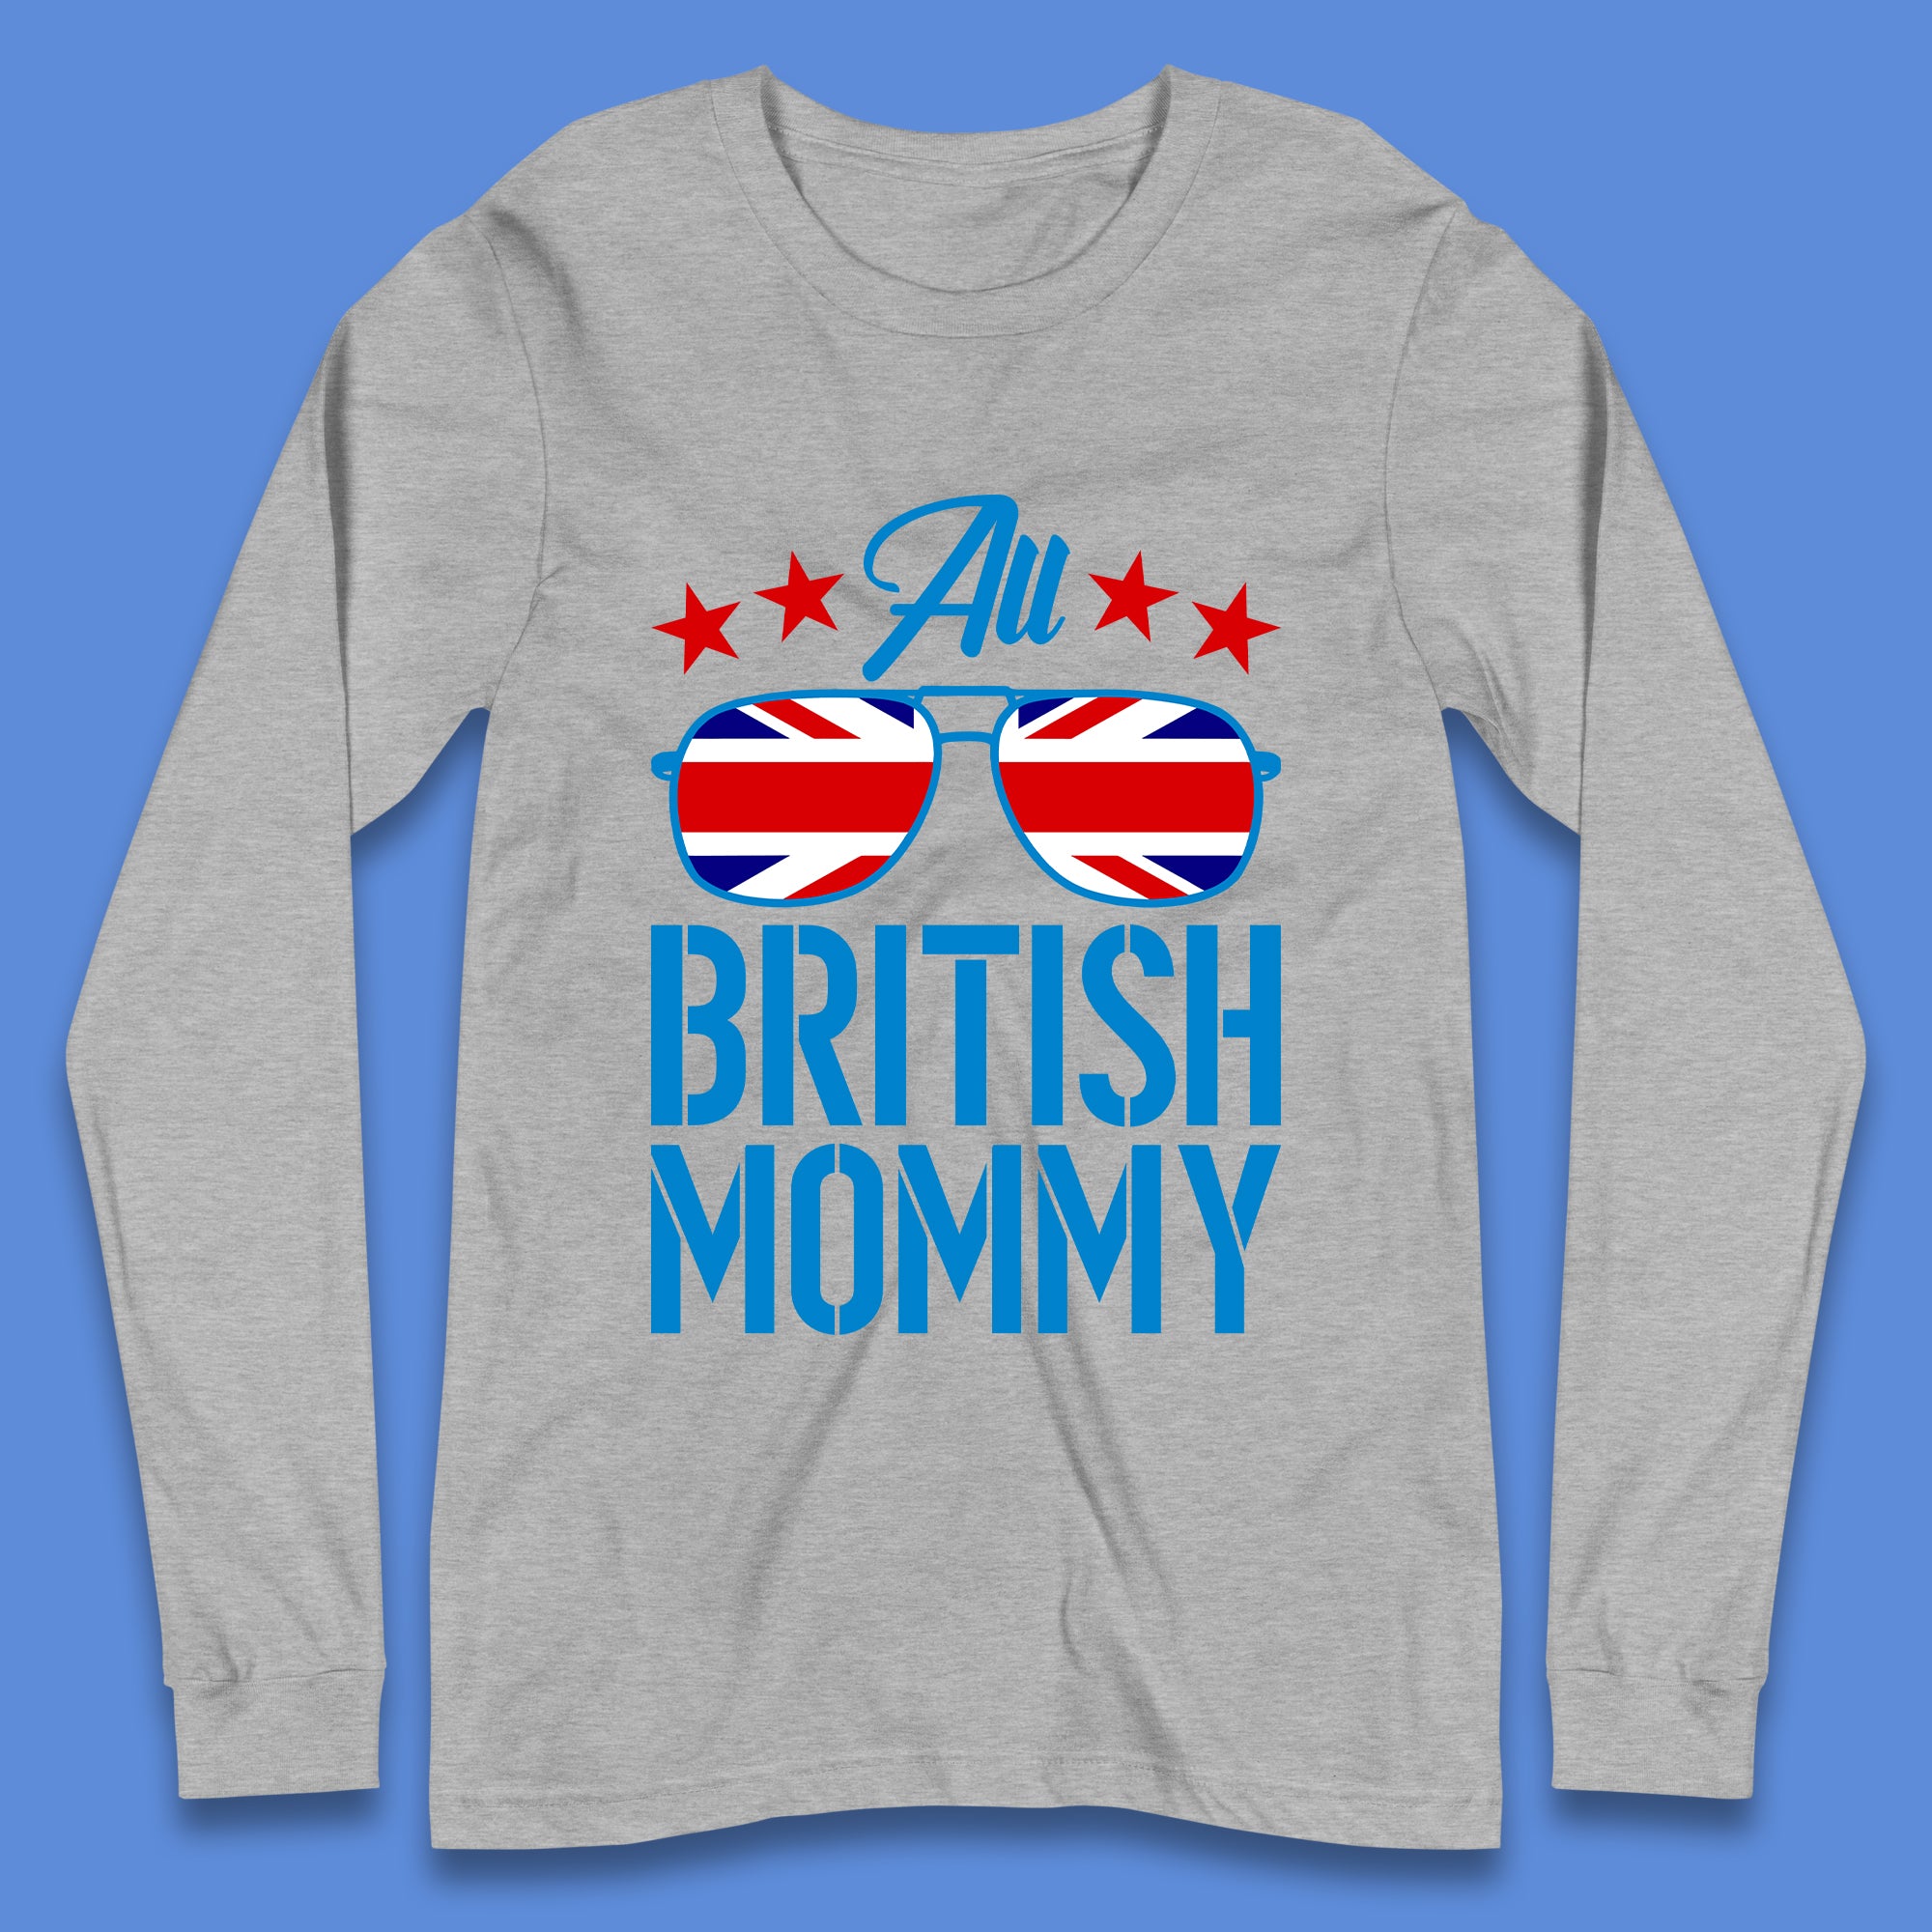 British Mommy Long Sleeve T-Shirt